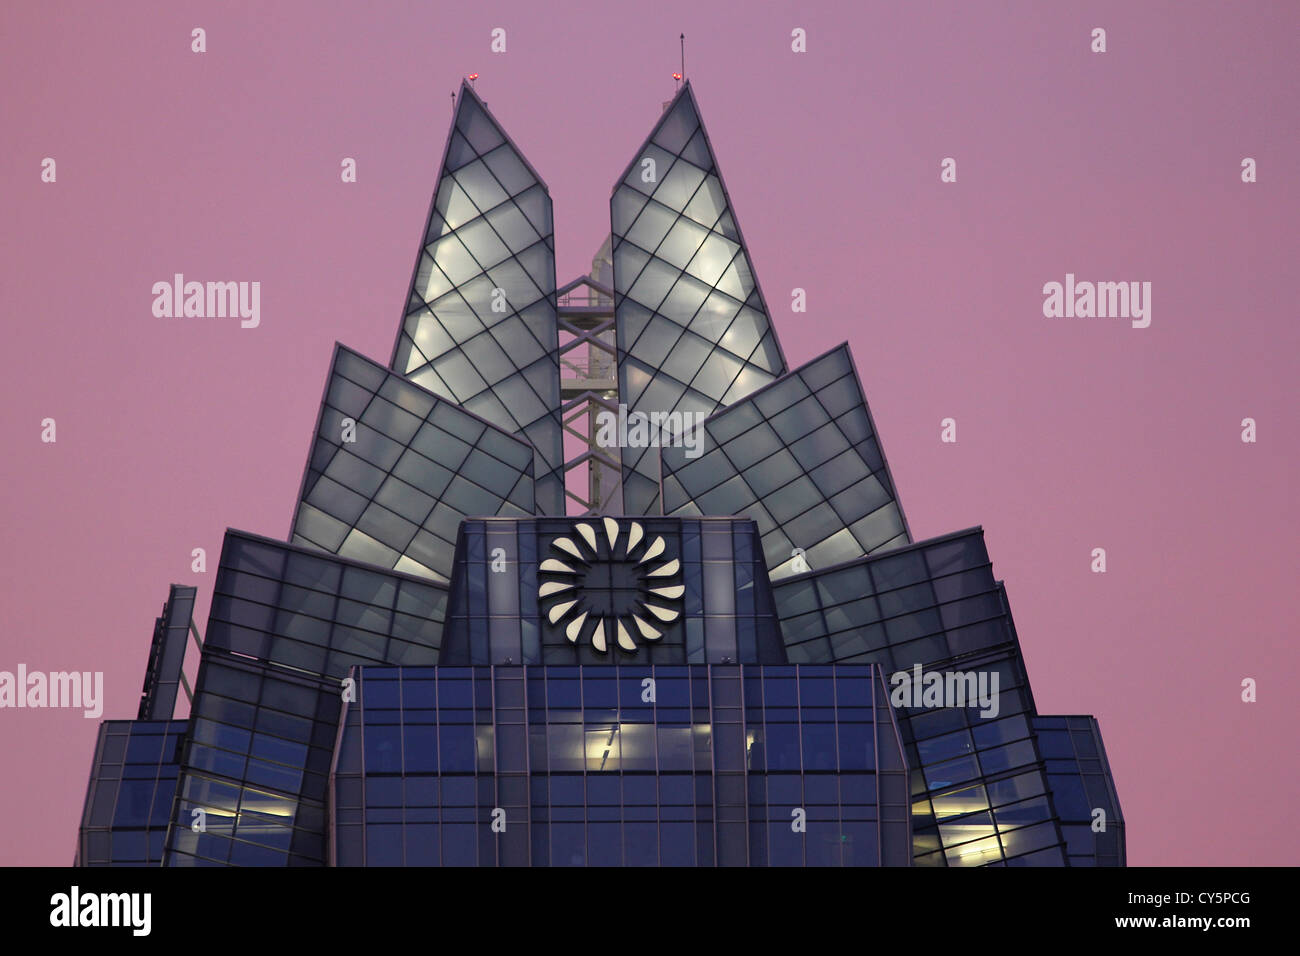 Dettaglio del gelo torre della Banca al tramonto, Austin, Texas Foto Stock